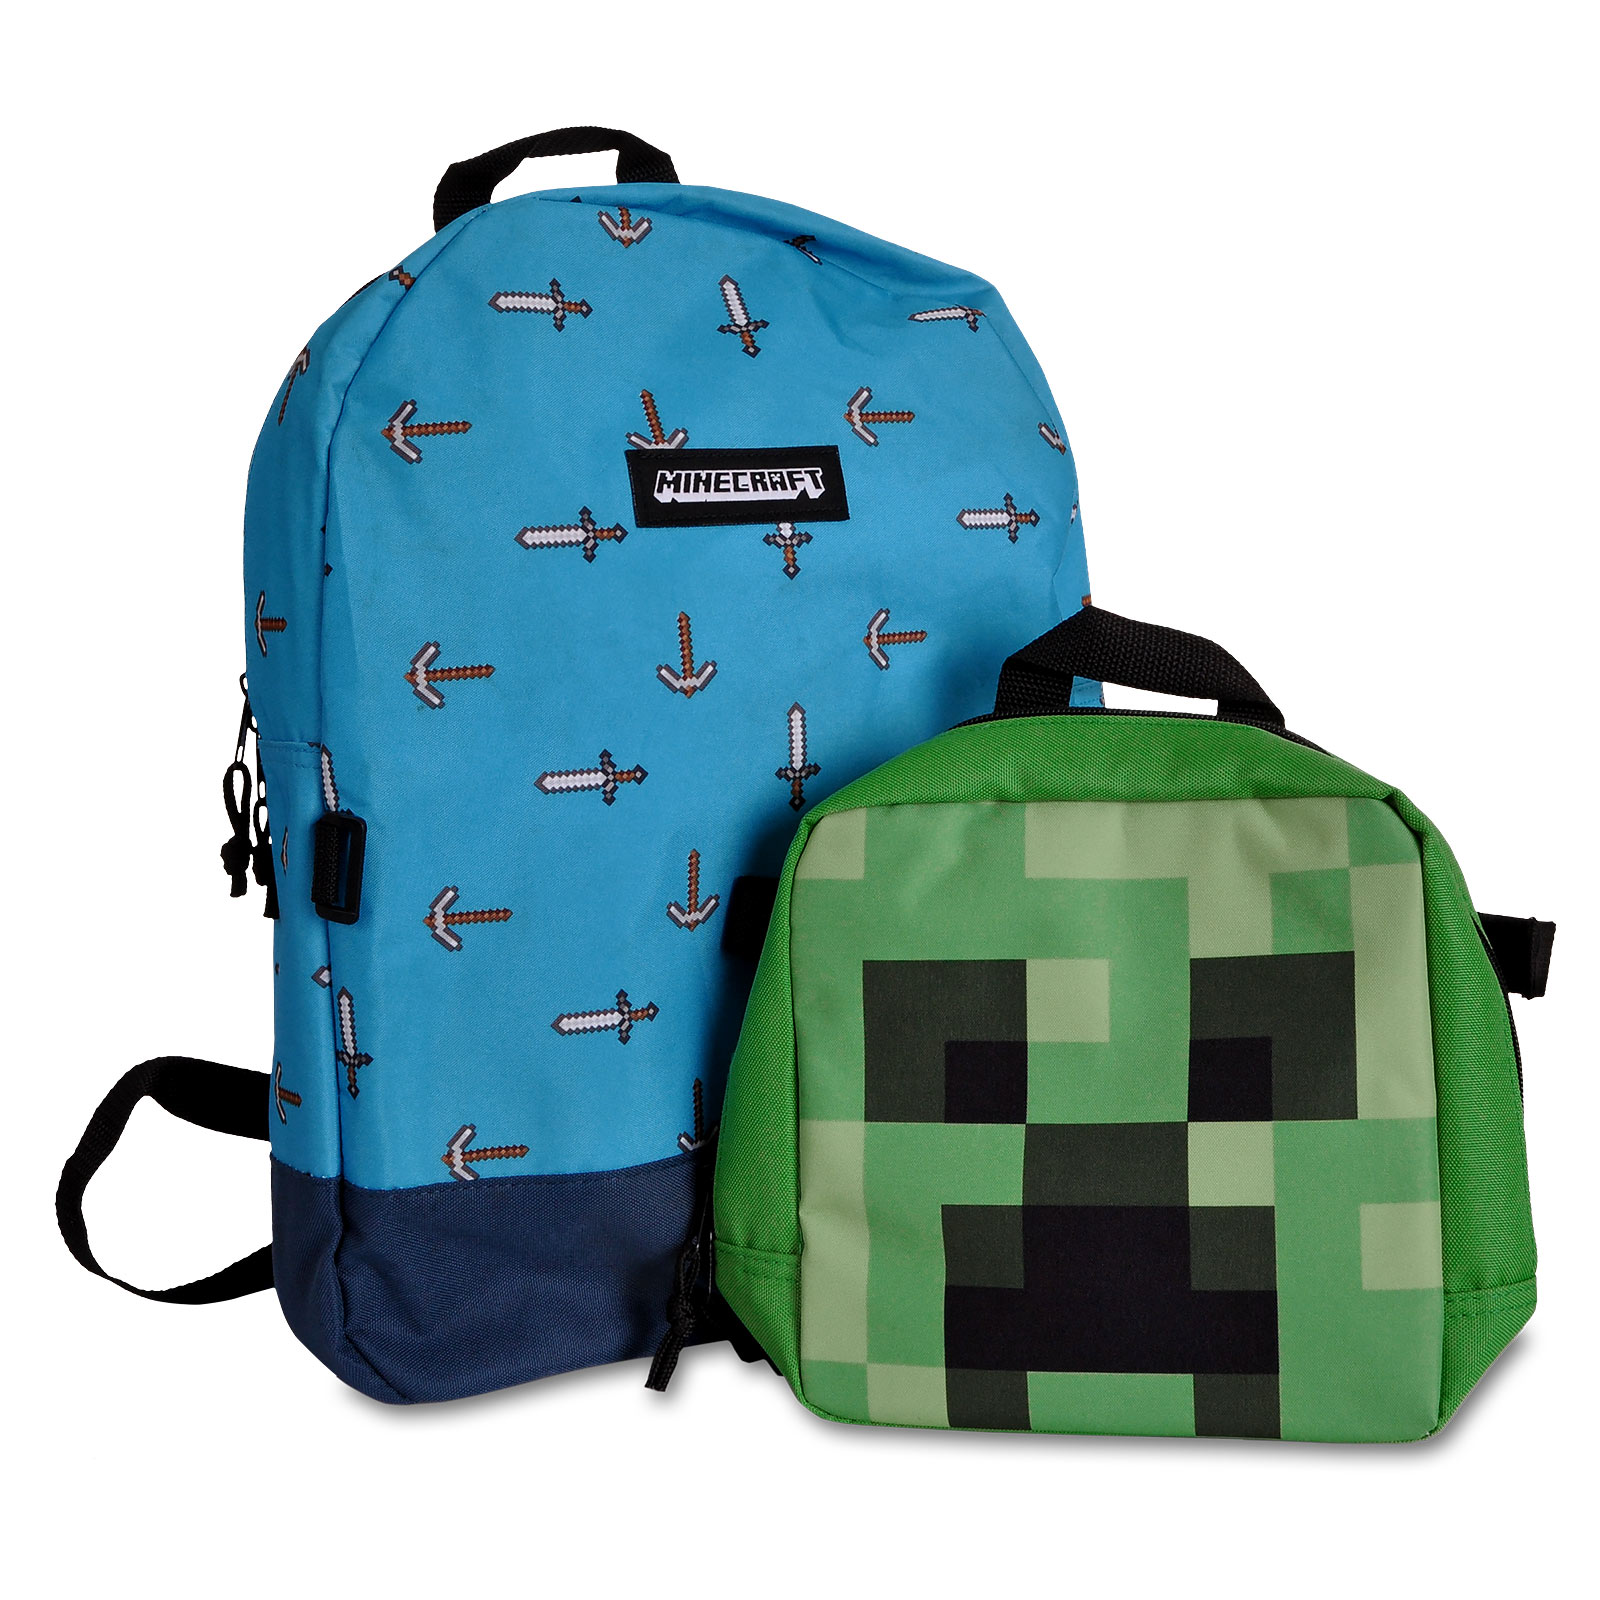 Minecraft - Zwaard & Bijl Rugzak met Creeper Mini Tas